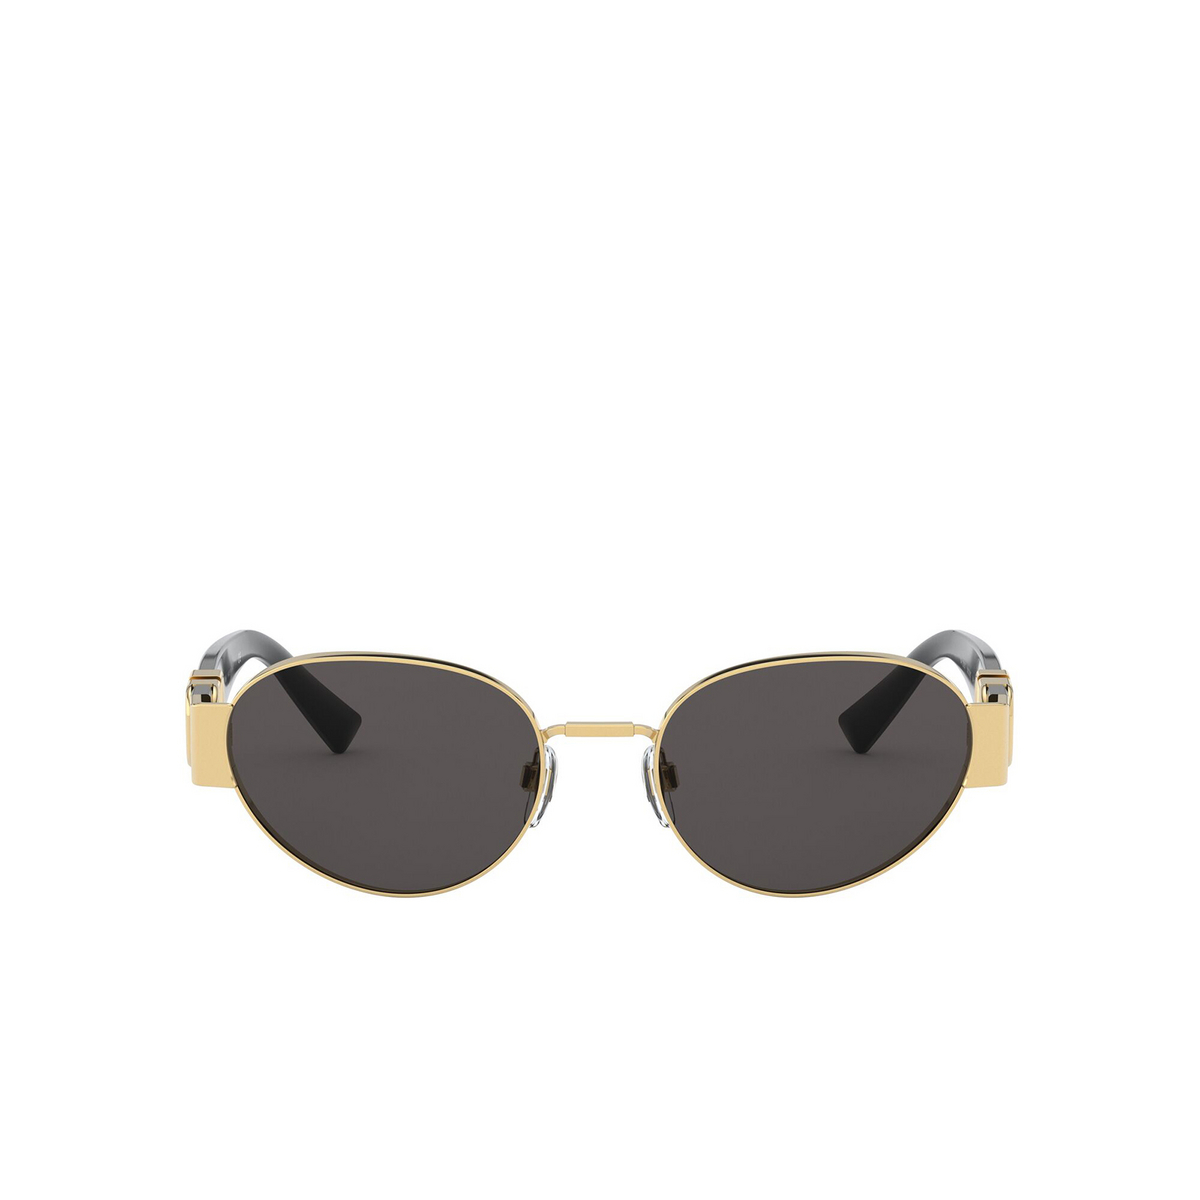 Valentino® Oval Sunglasses: VA2037 color Gold 300287 - front view.